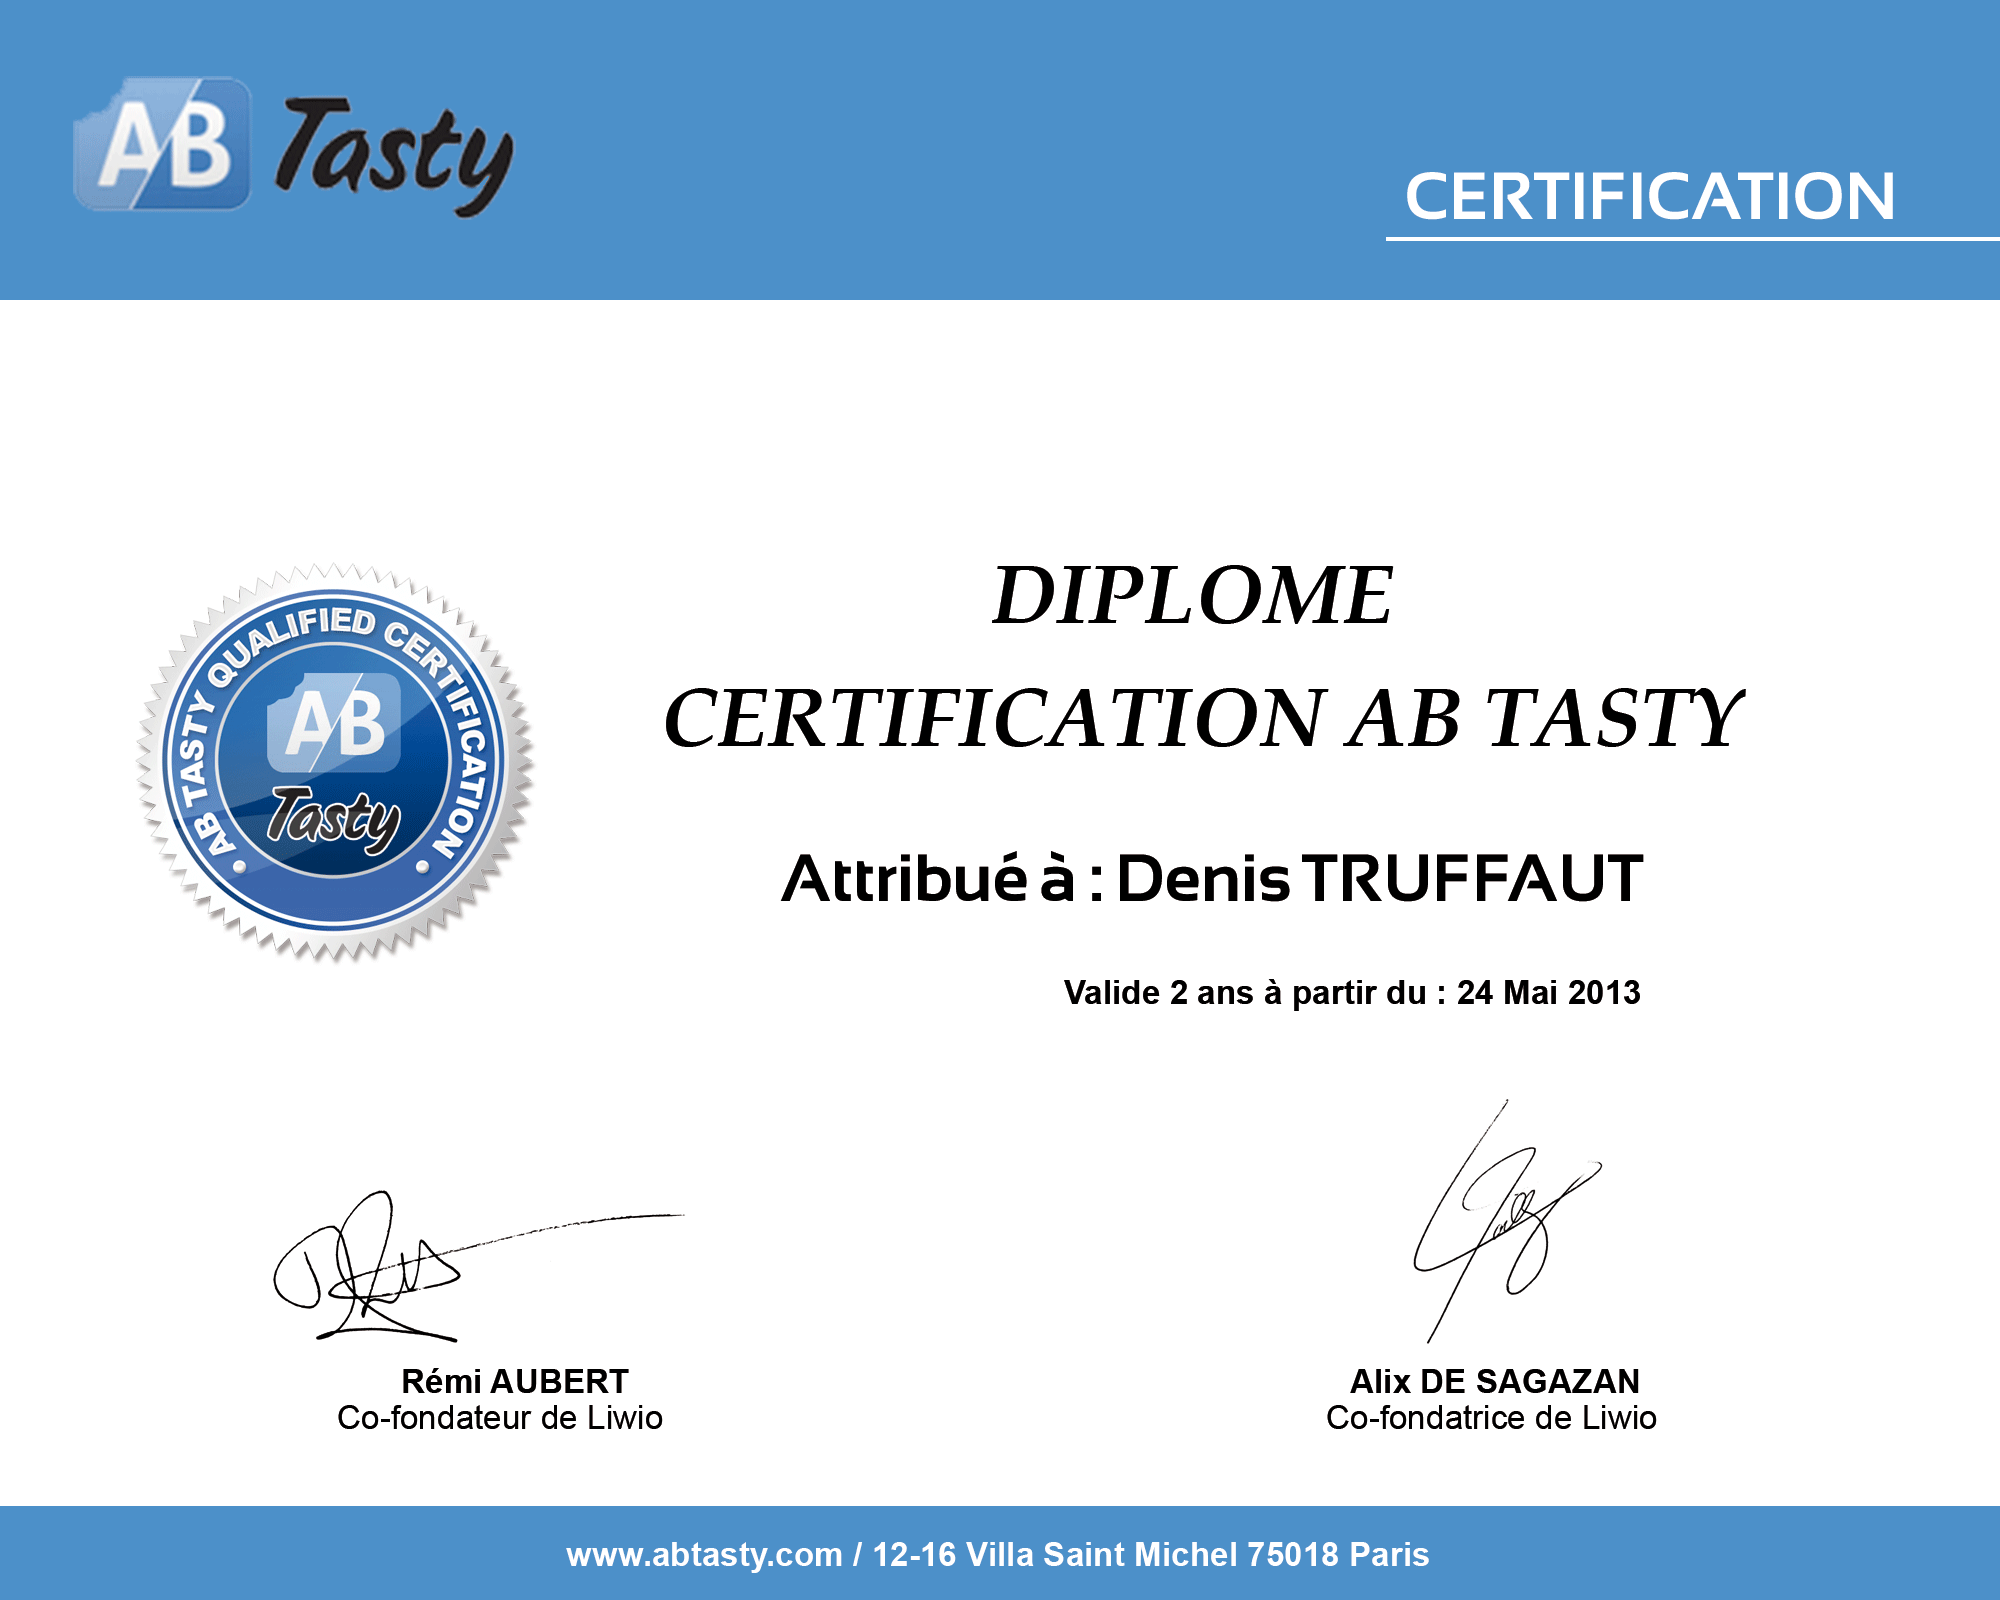 denis truffaut certifications scrum master ceseo php mysql